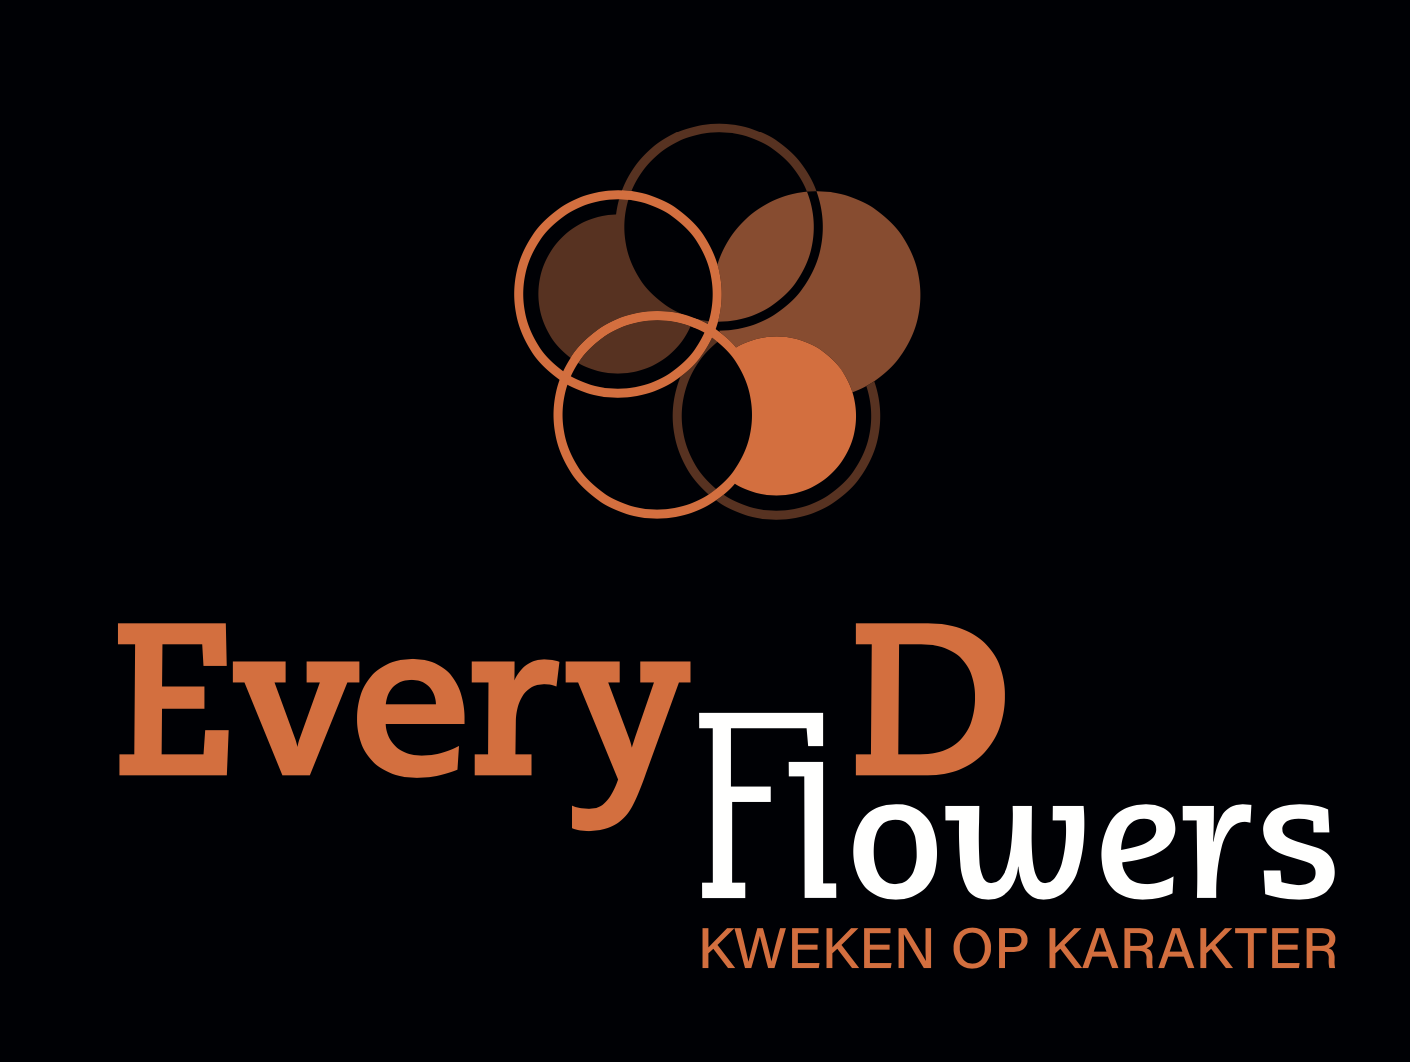 Every D Flowers - Kweken op karakter - logo